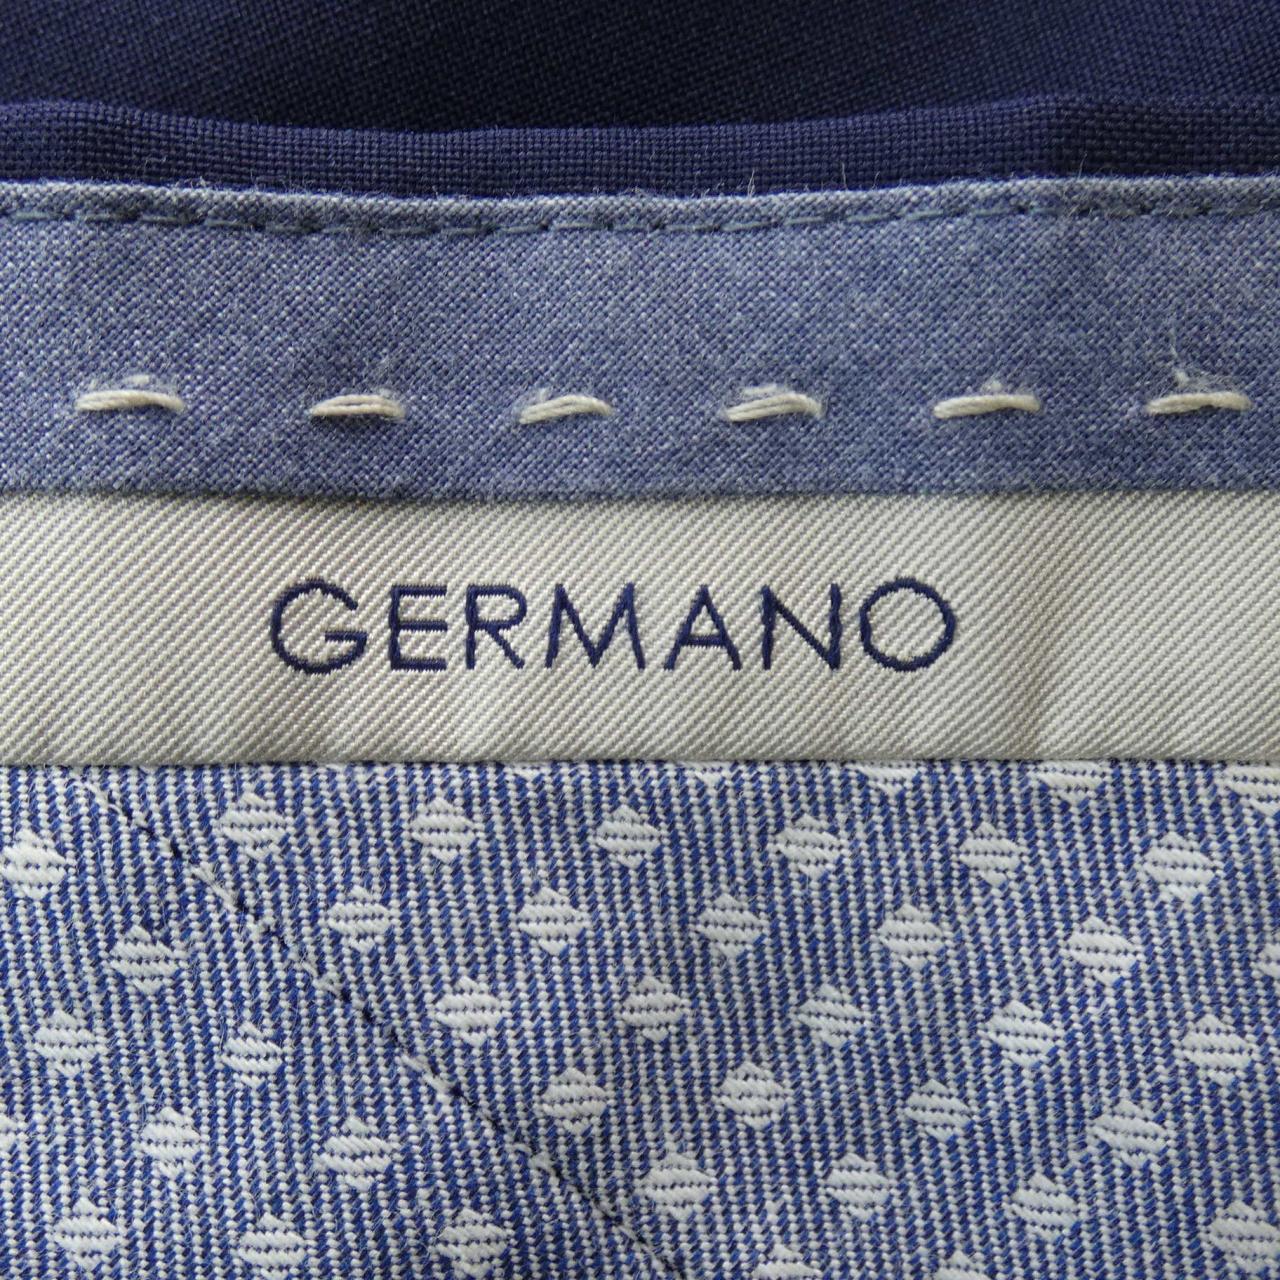 GERMANO裤子